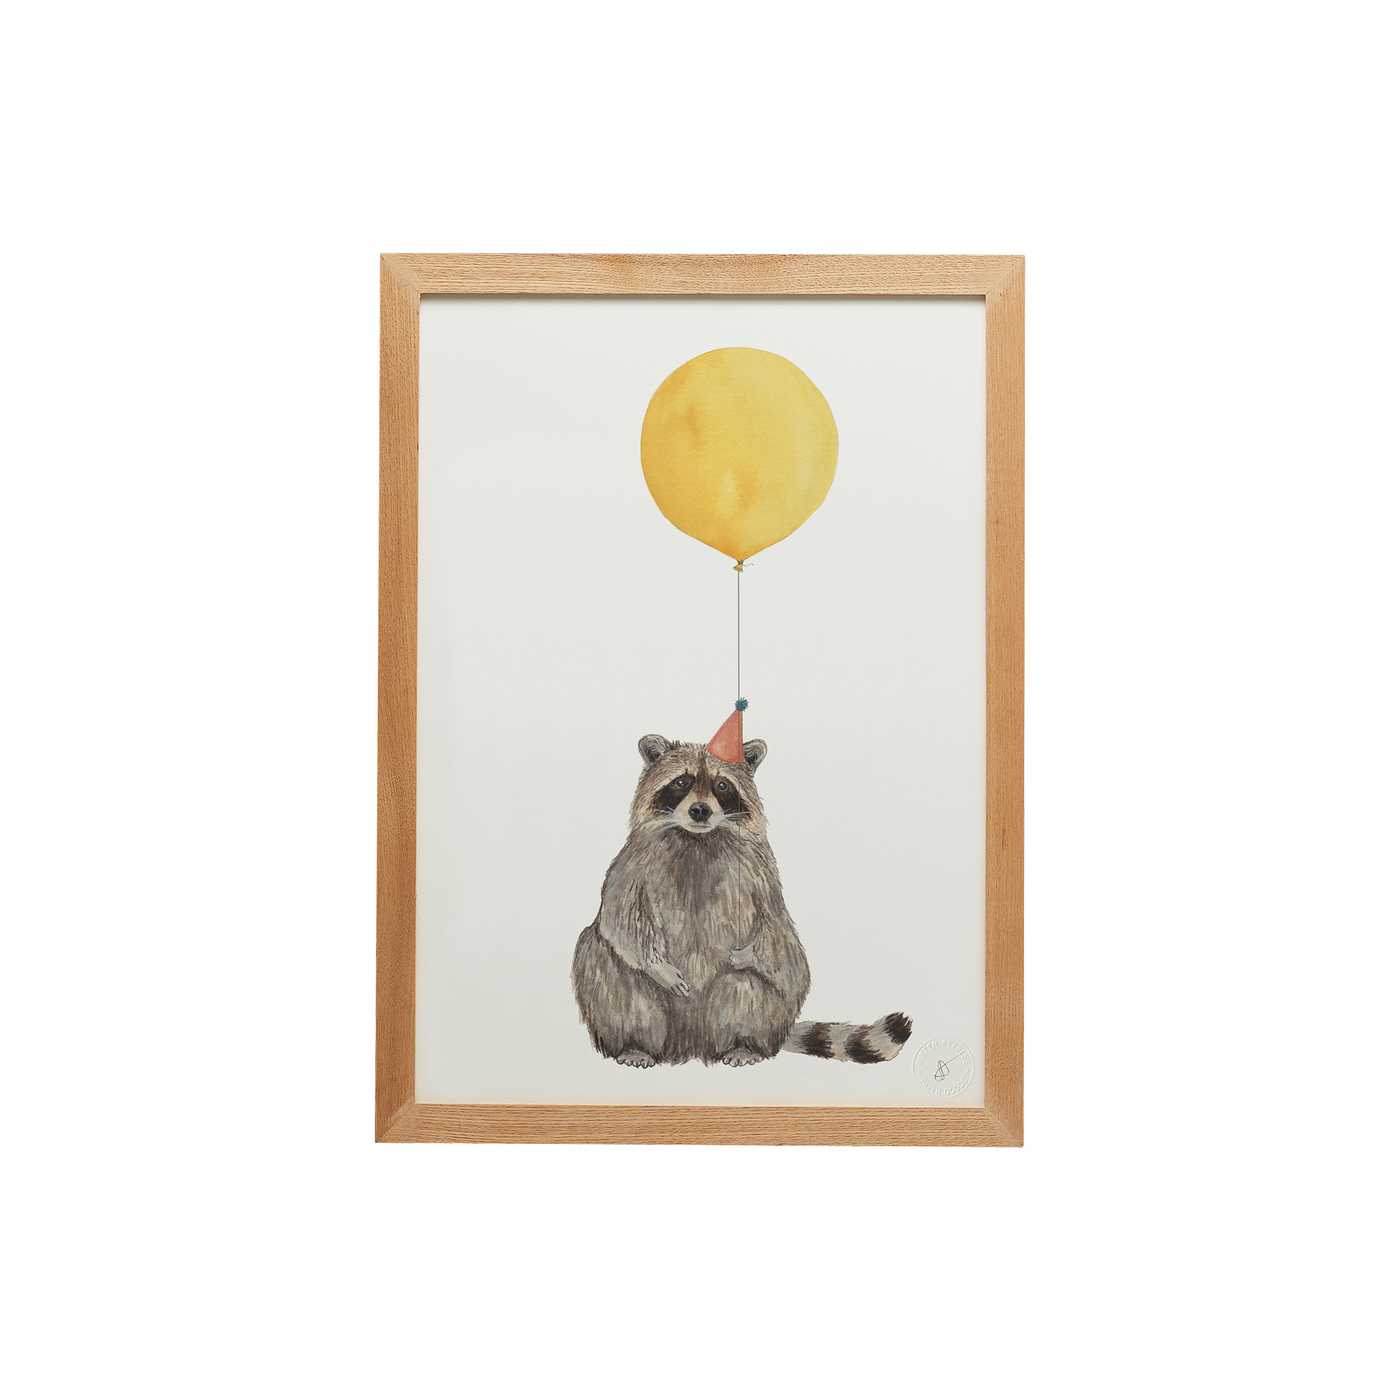 Balloon Animal Raccoon Print cut out in a frame